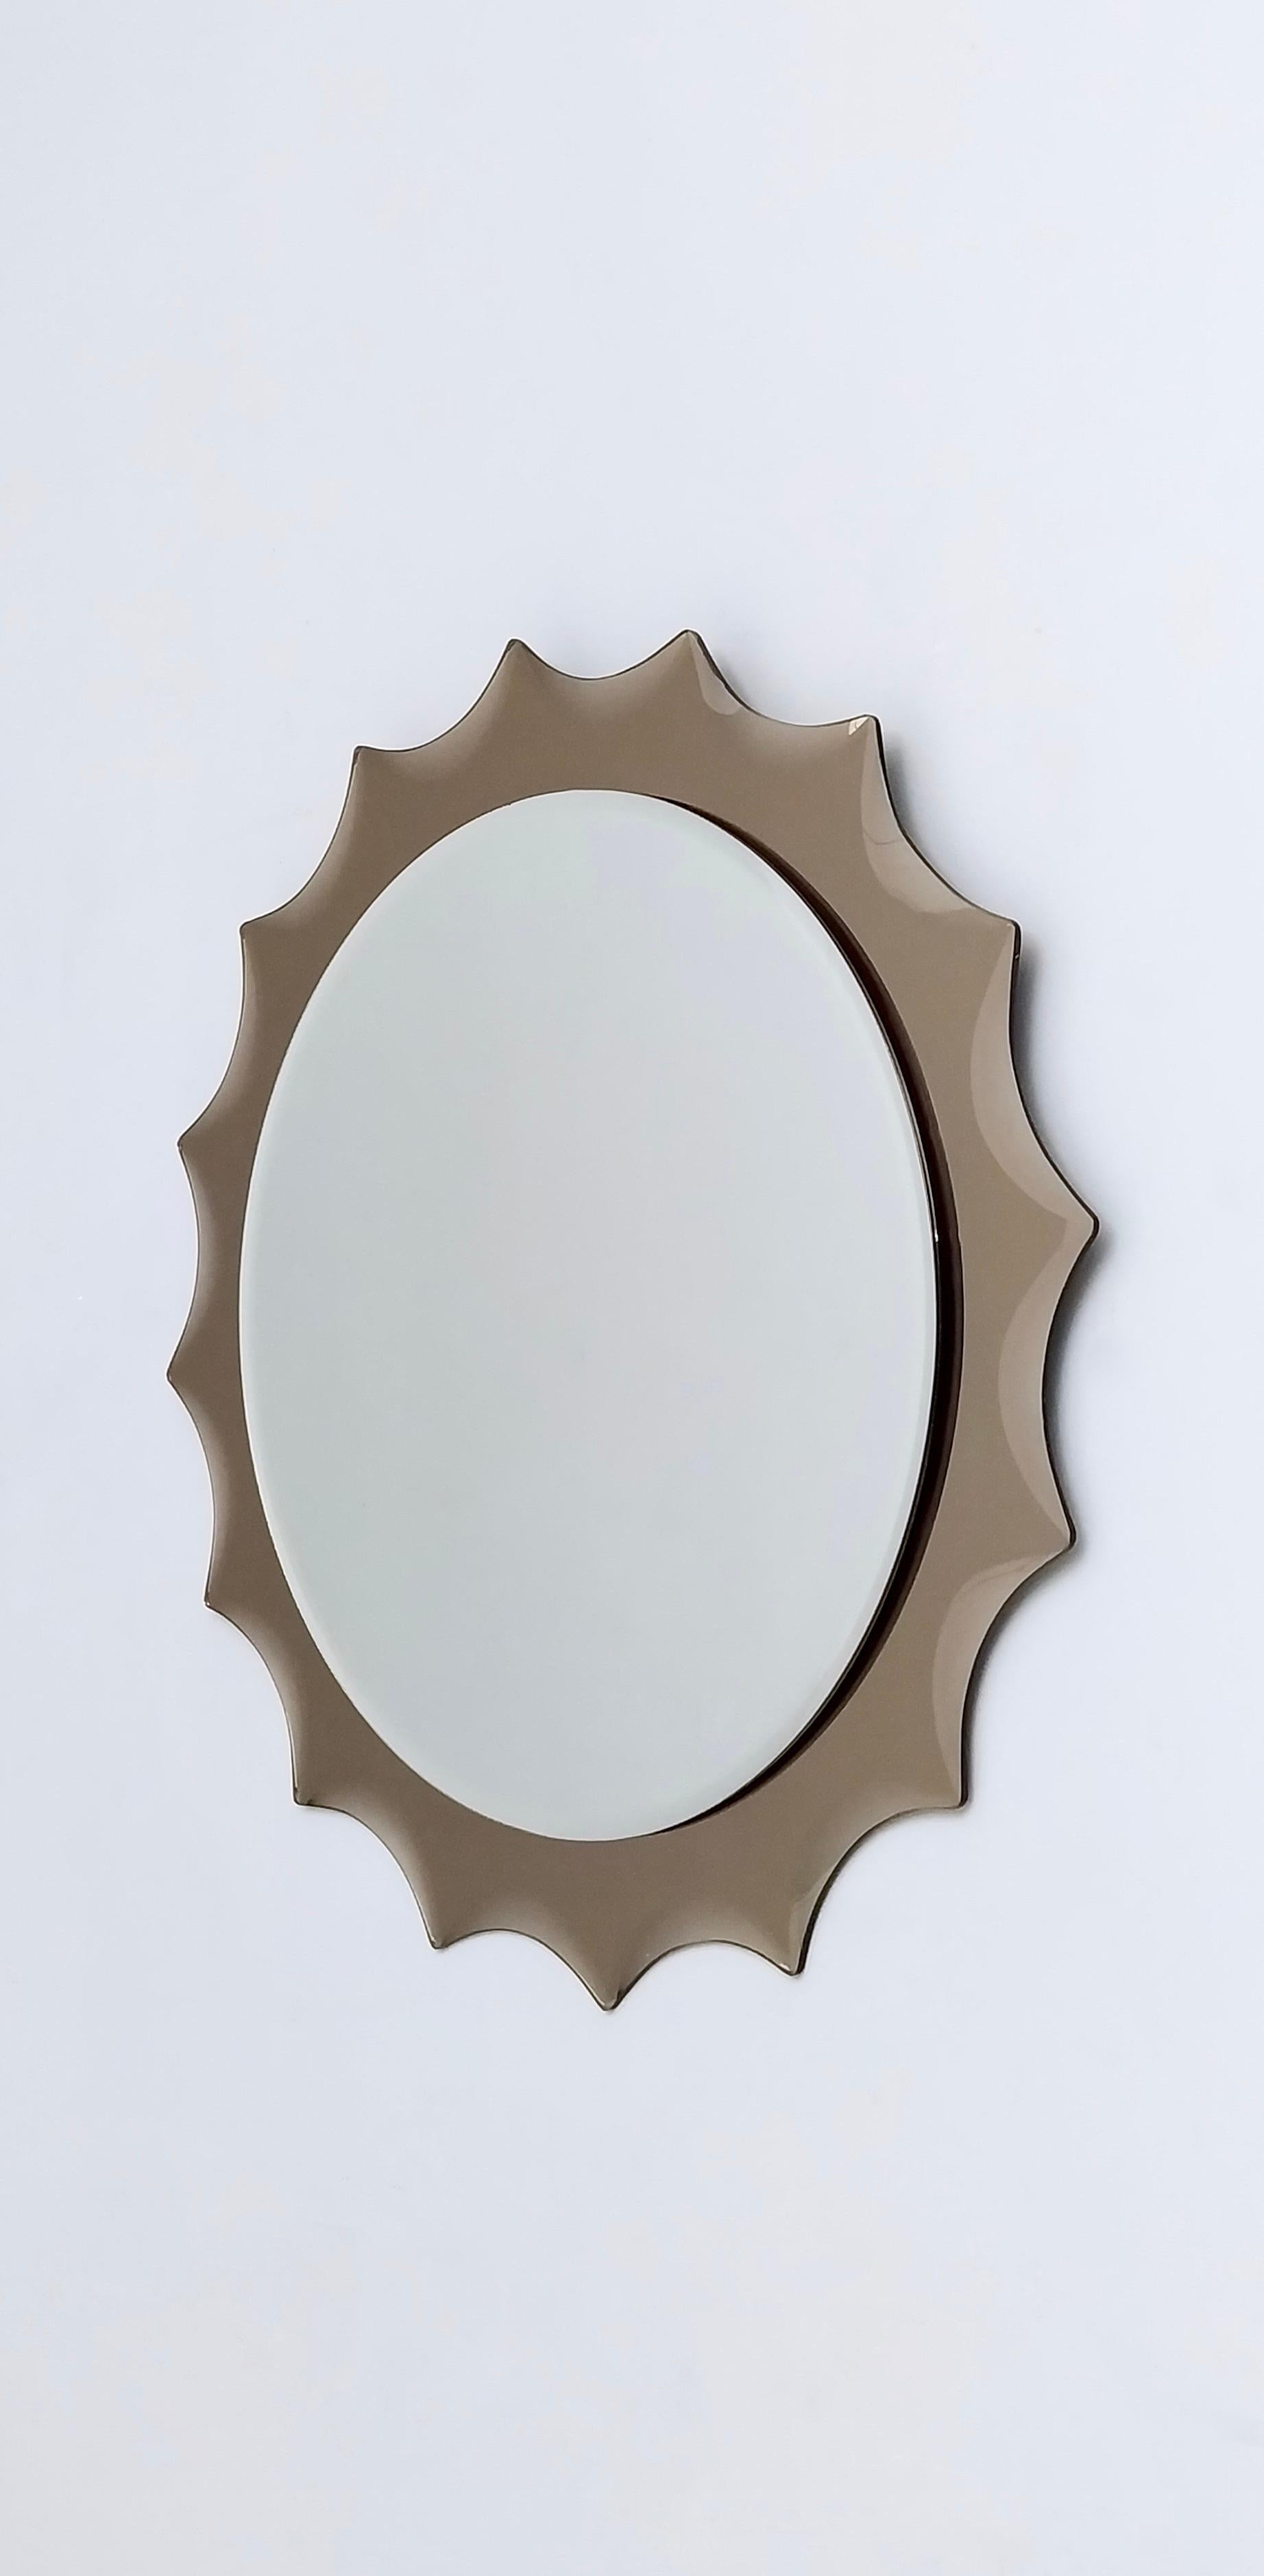 sun shaped mirror